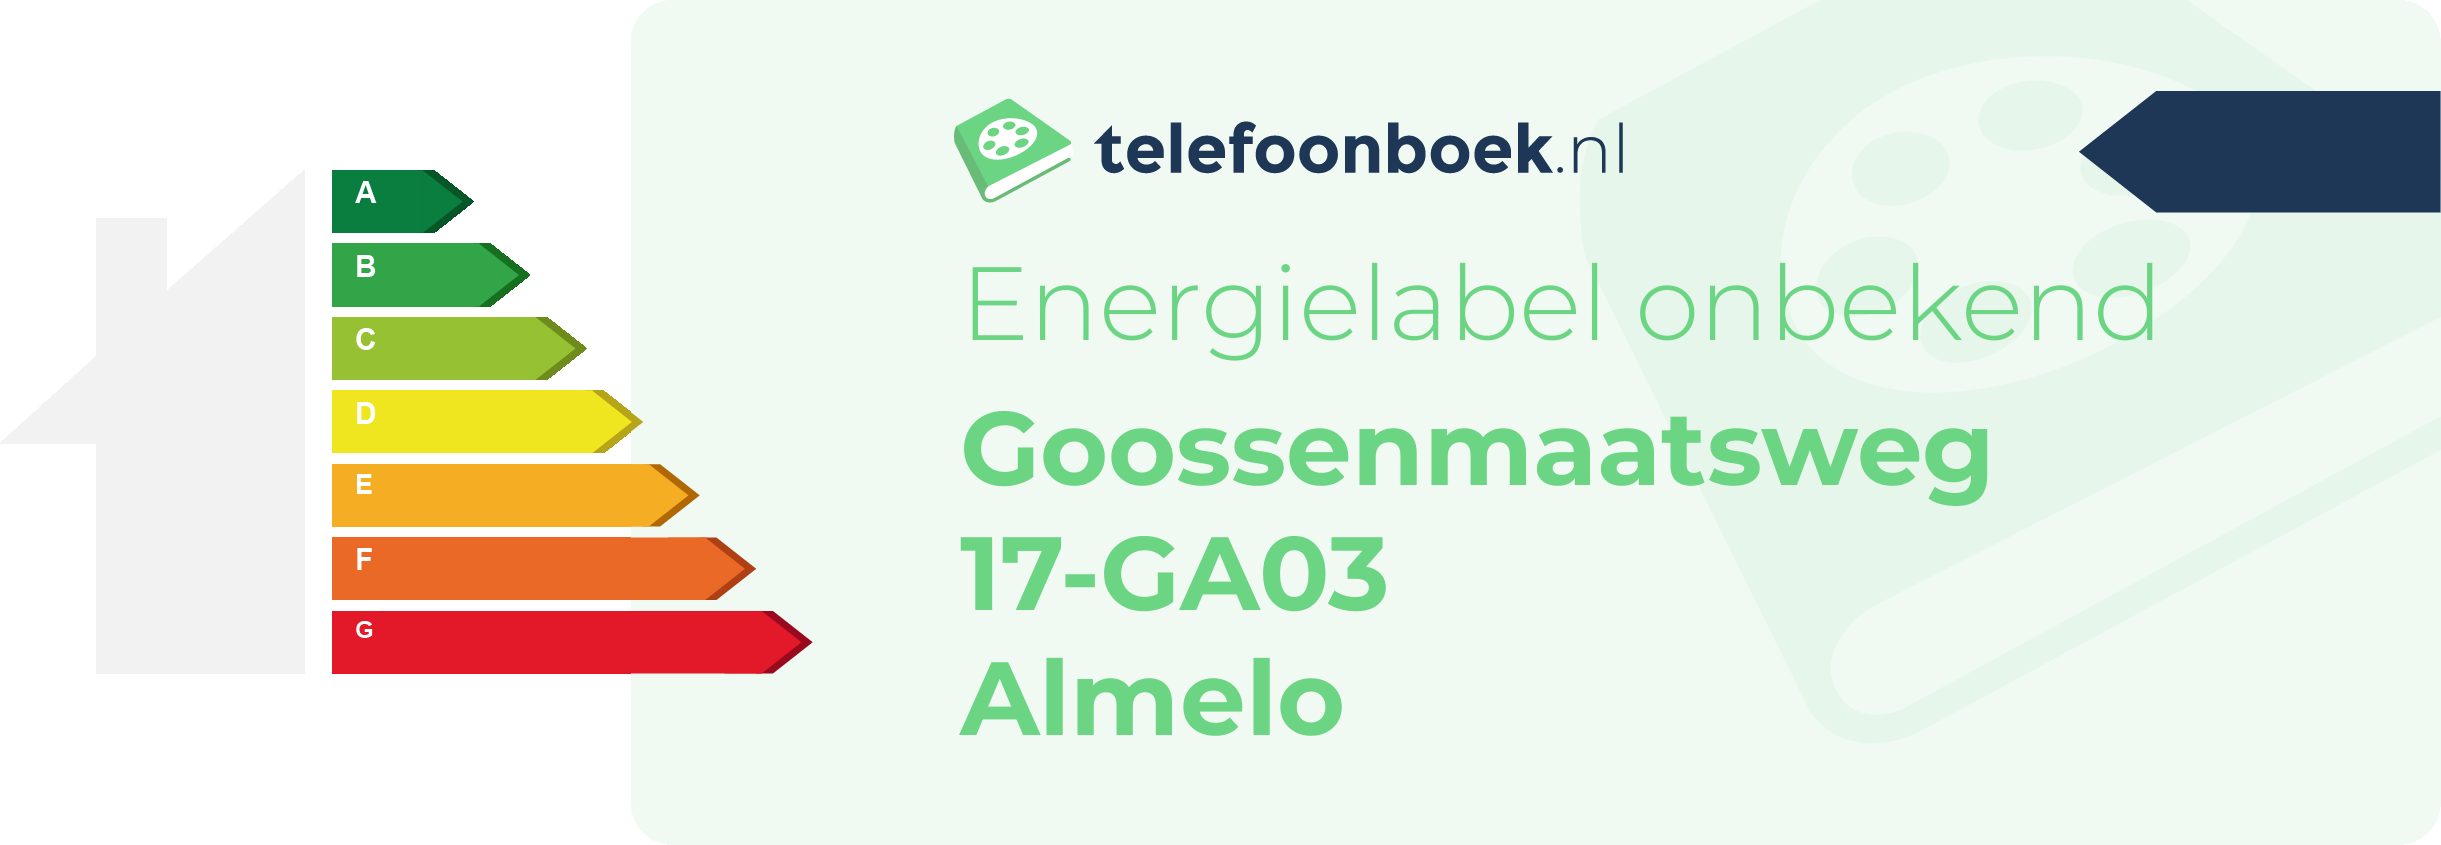 Energielabel Goossenmaatsweg 17-GA03 Almelo